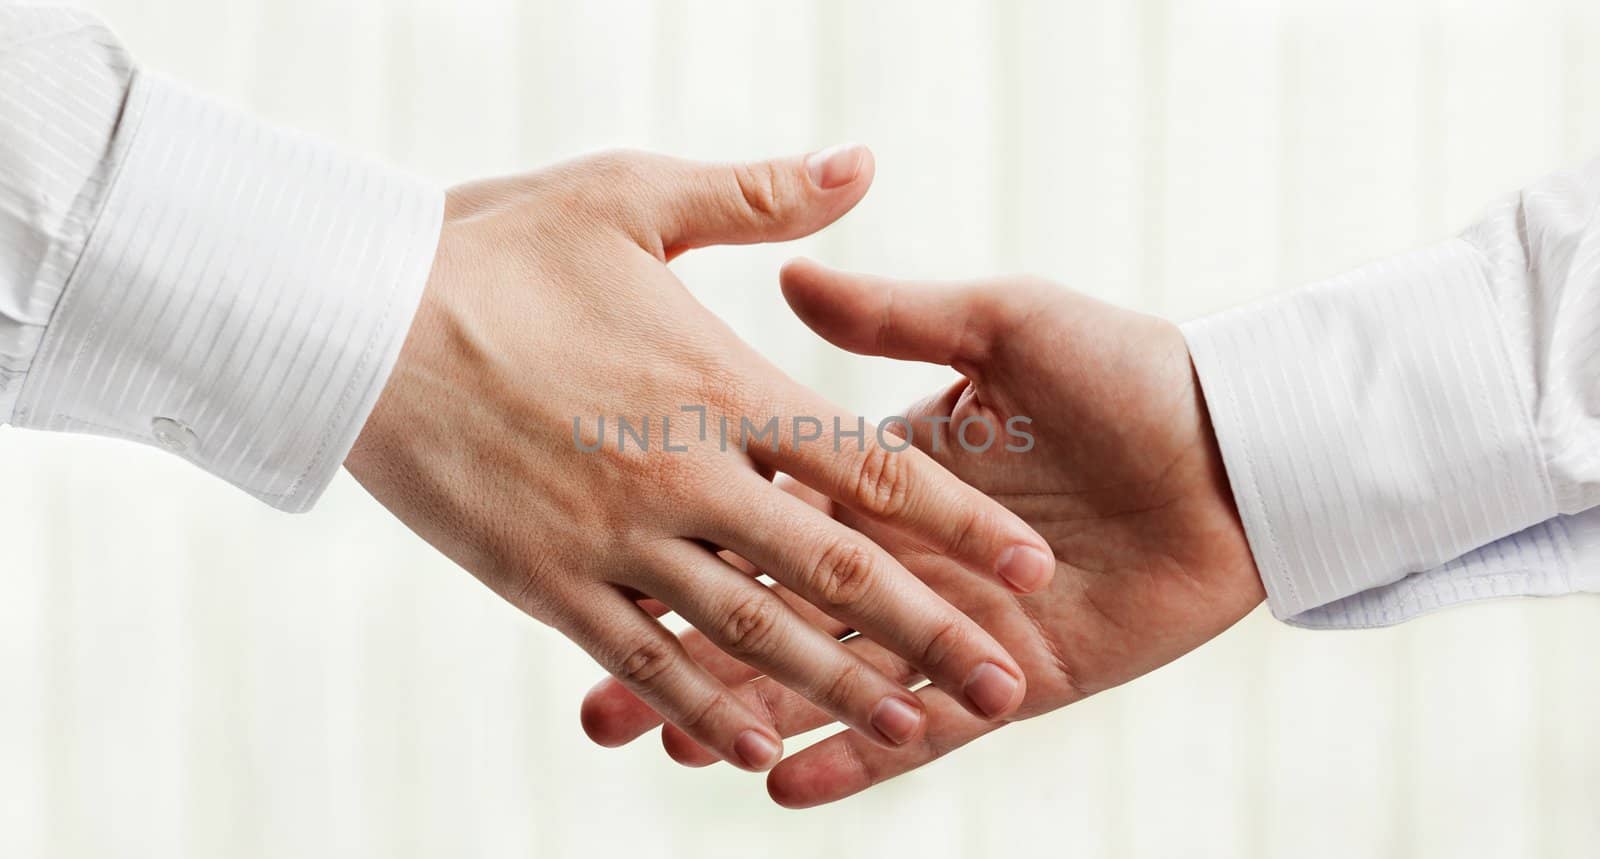 Business people hand greeting or meeting handshake